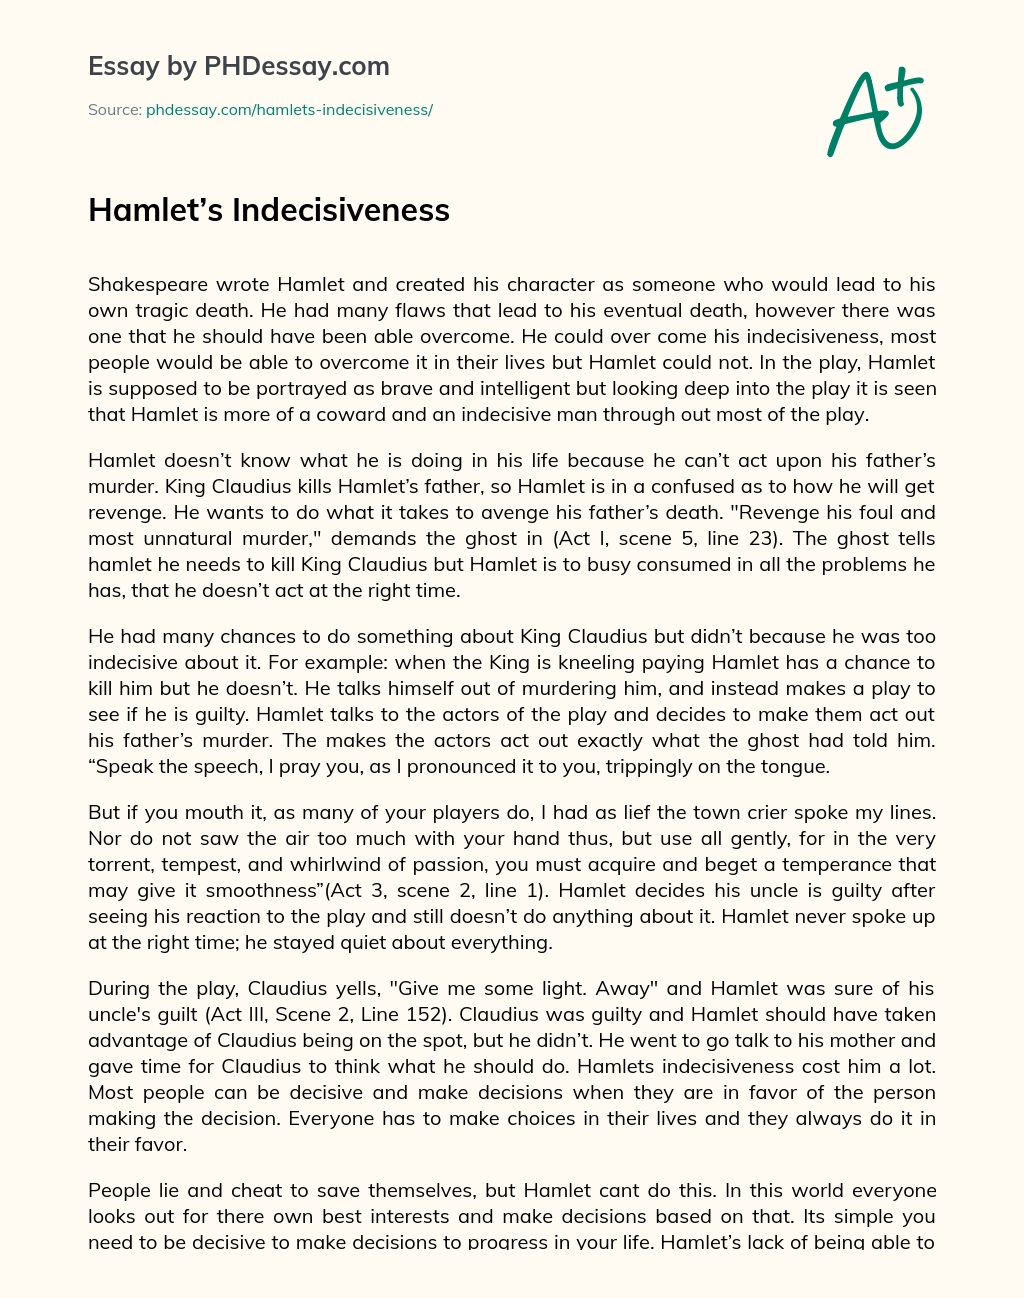 essay on hamlet's indecisiveness